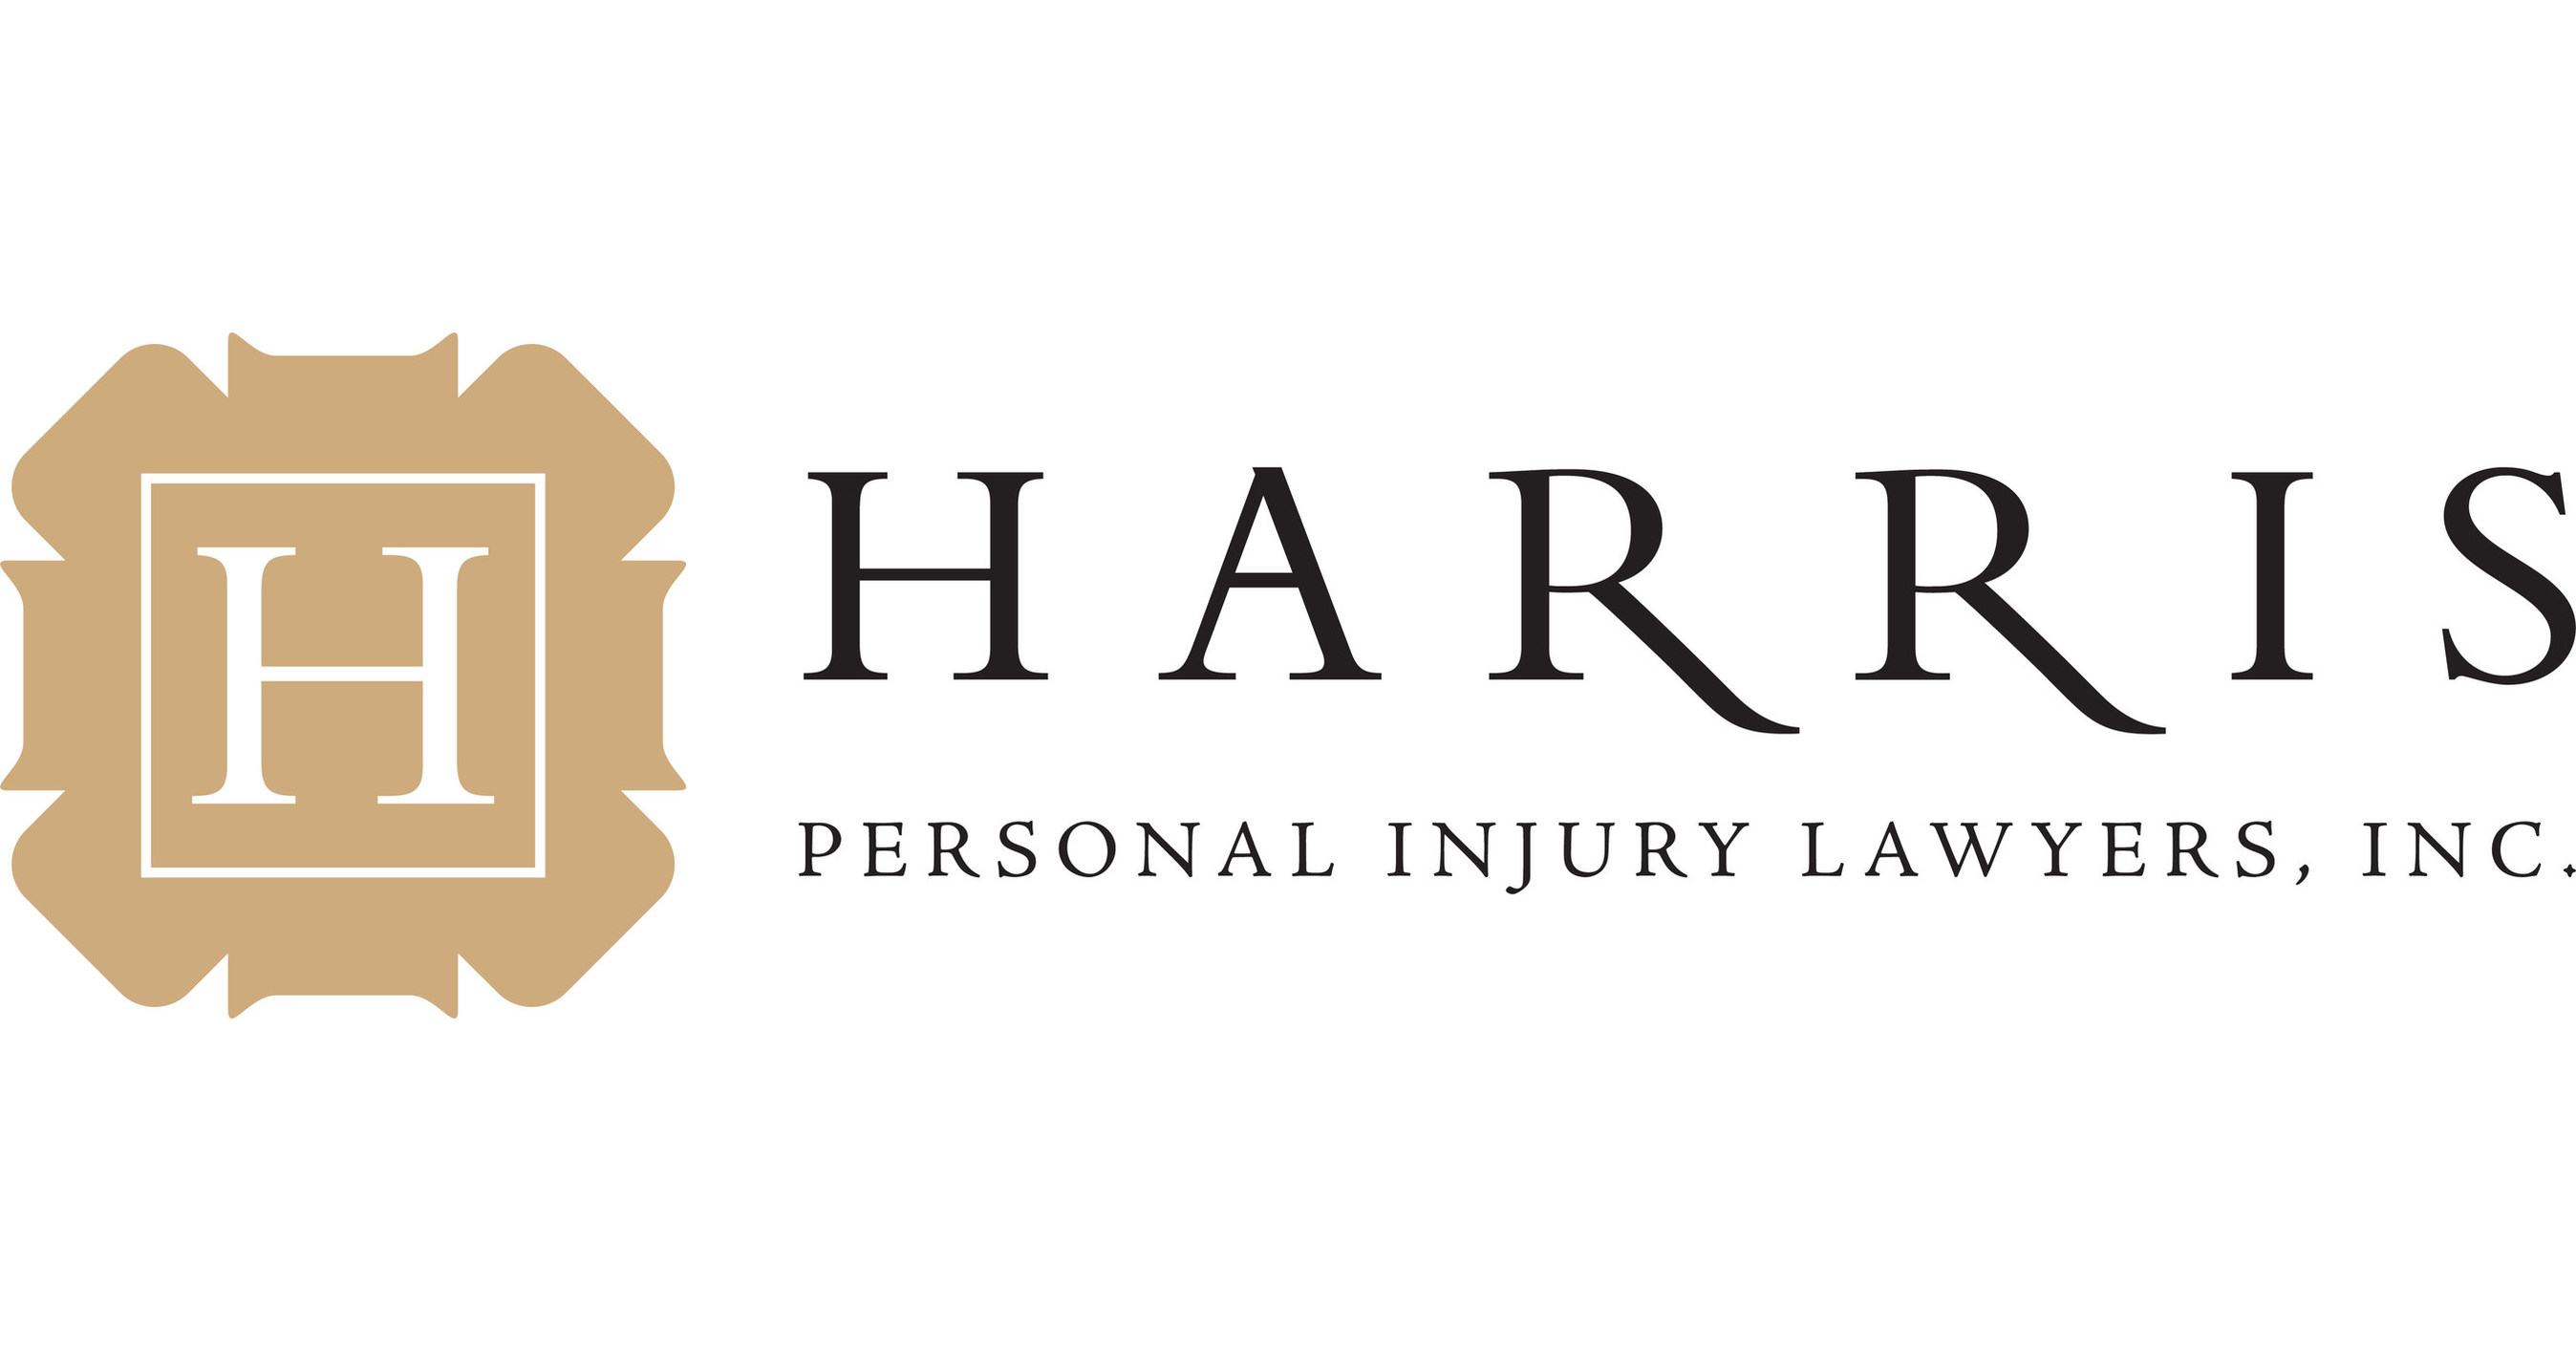 Harris Particular Harm Legal professionals, Inc. Recovers $3.5 million for Santa Clara County Shopper